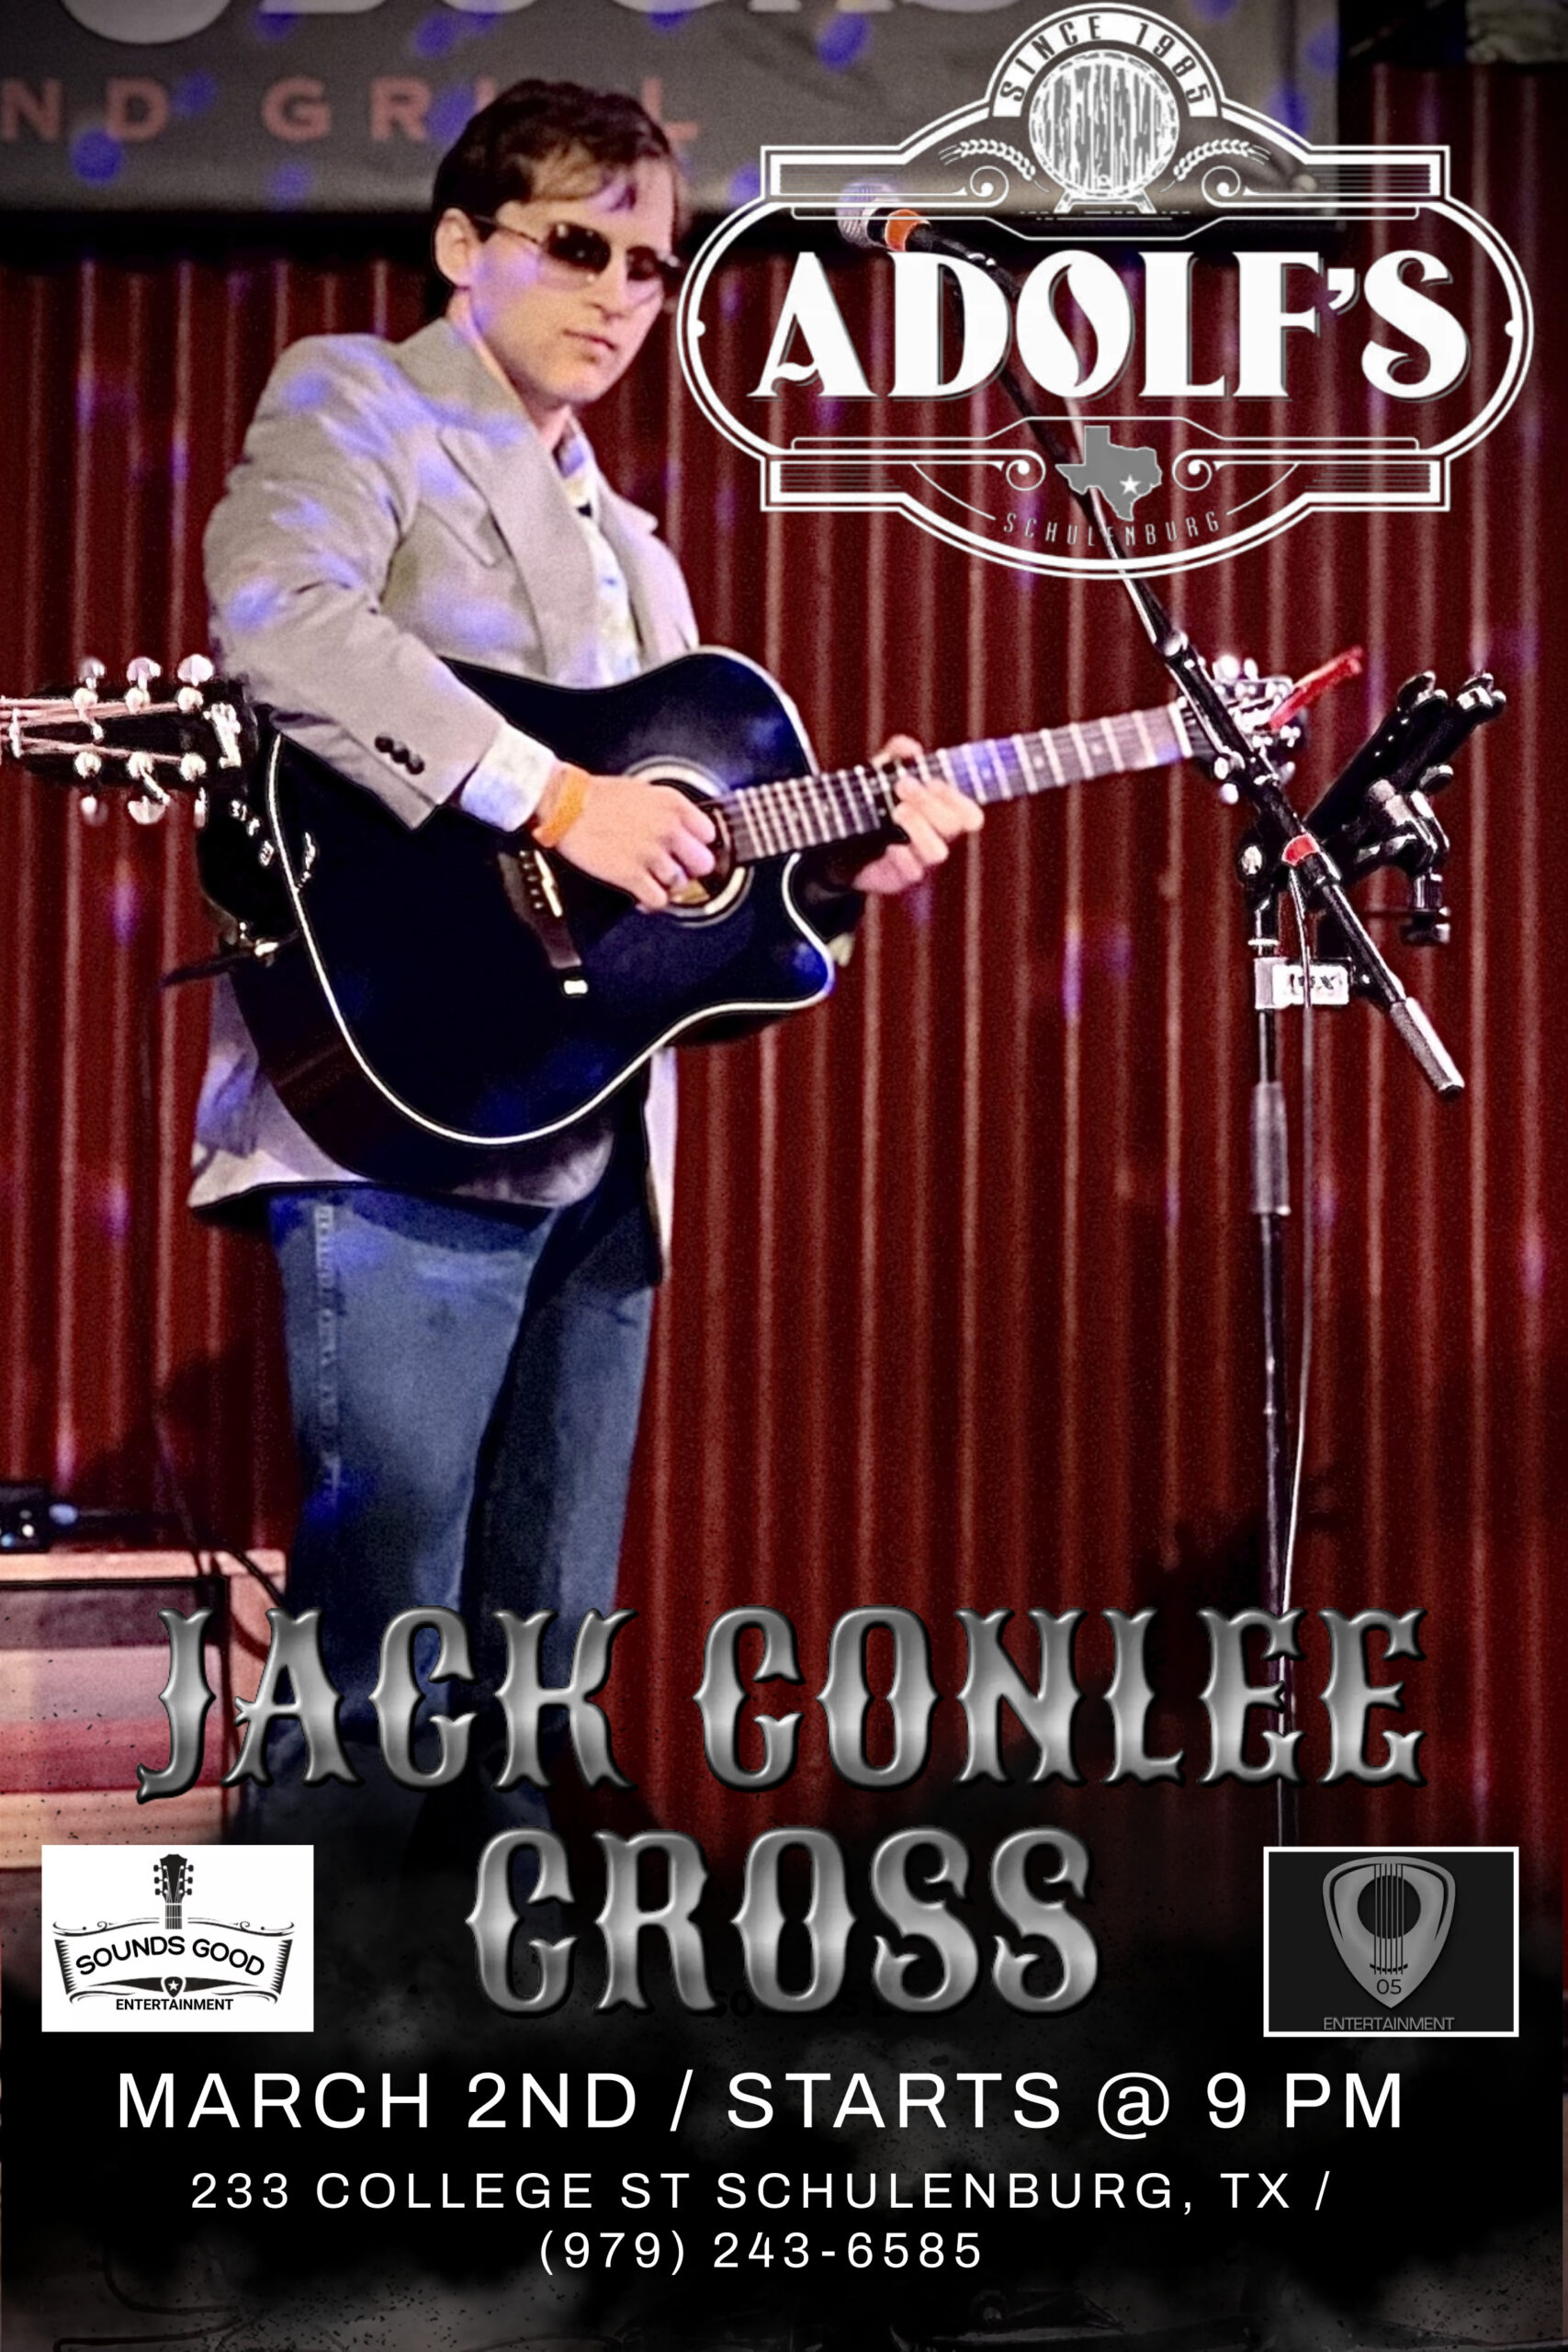 Jack Conlee Cross @ Adolf's